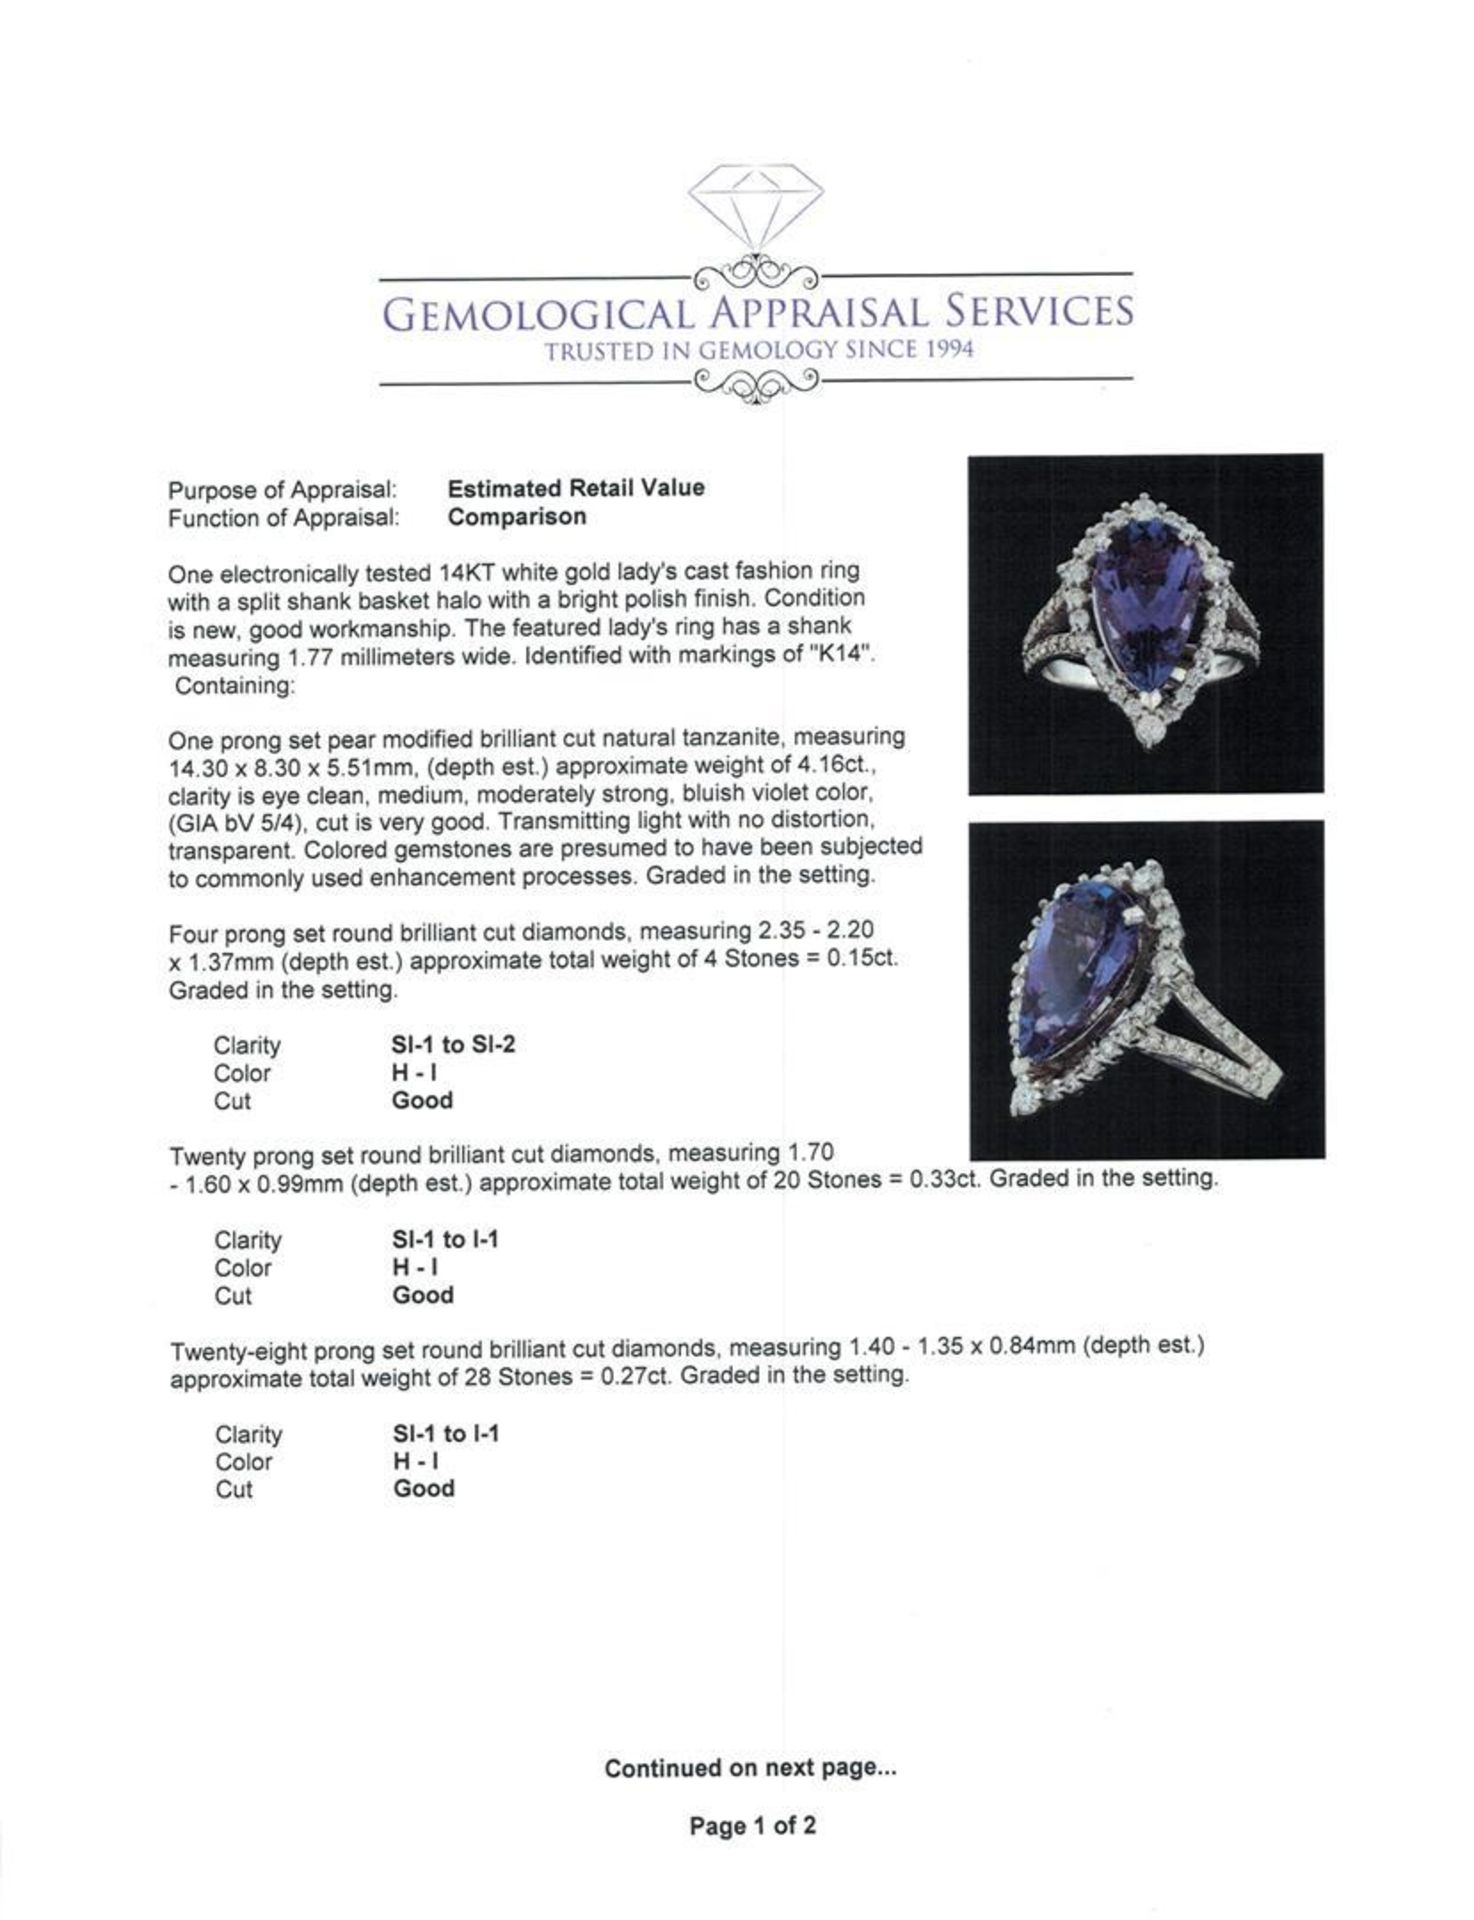 4.16 ctw Tanzanite and Diamond Ring - 14KT White Gold - Image 5 of 6